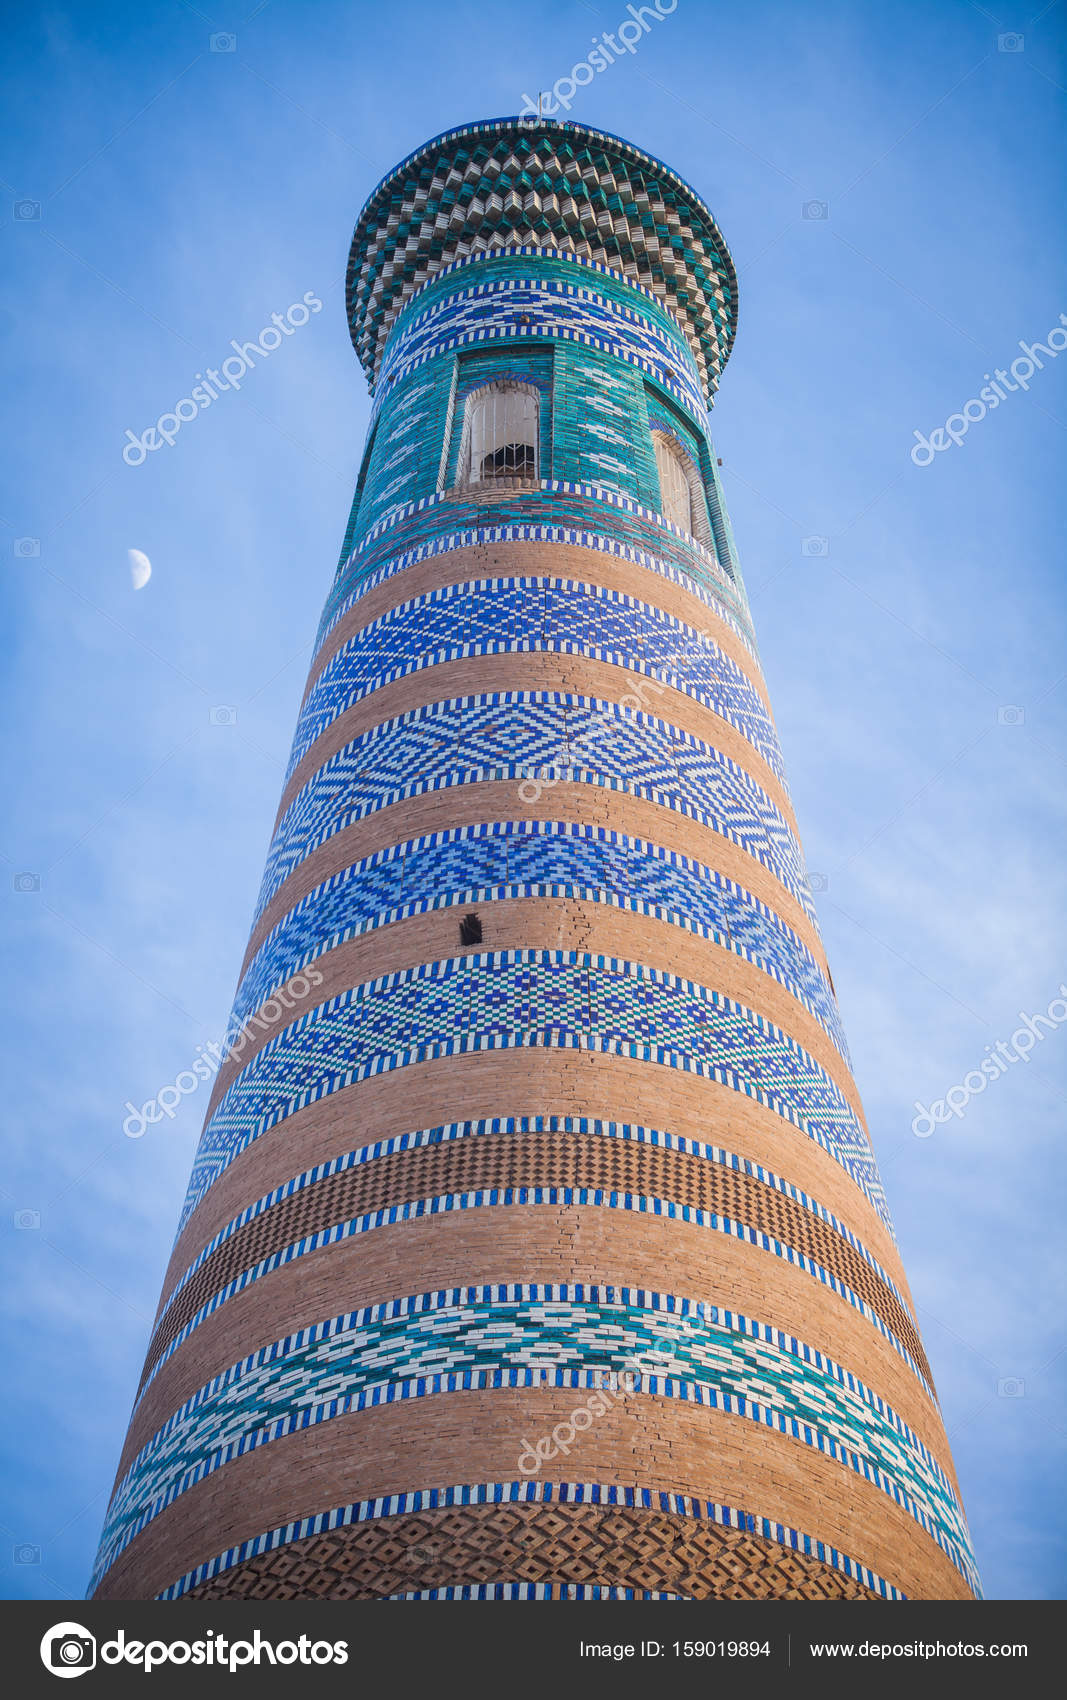 https://st3.depositphotos.com/1943535/15901/i/1600/depositphotos_159019894-stock-photo-islam-khoja-minaret-in-khiva.jpg